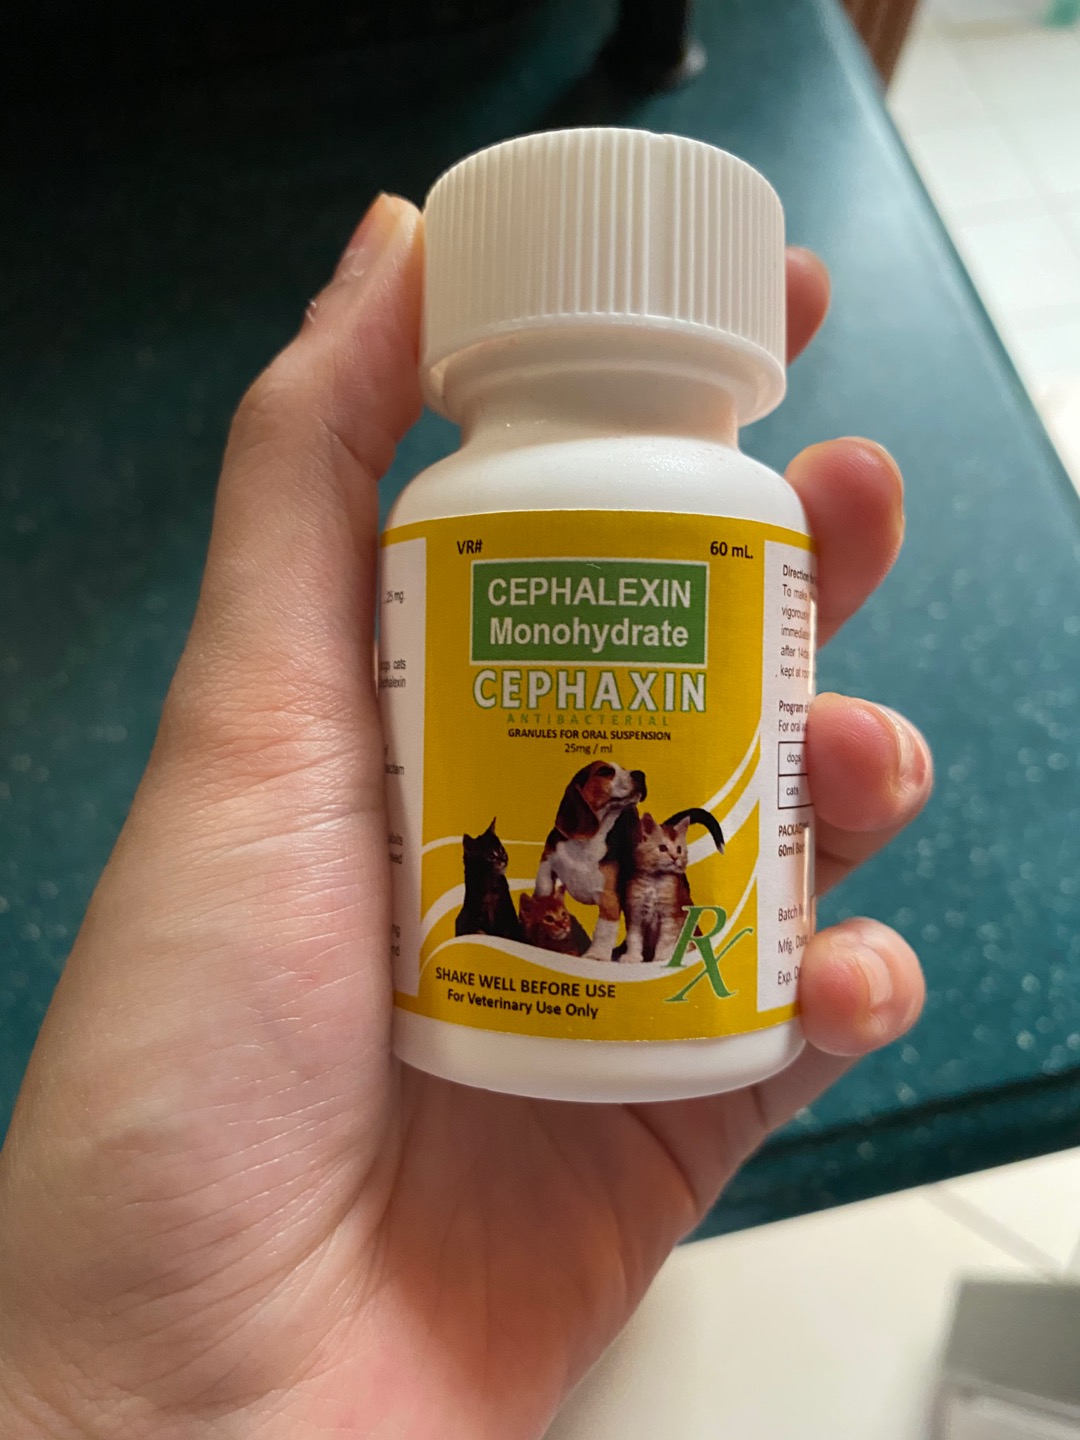 CEPHAXIN 60ml Cephalexin Monohydrate Shopee Philippines